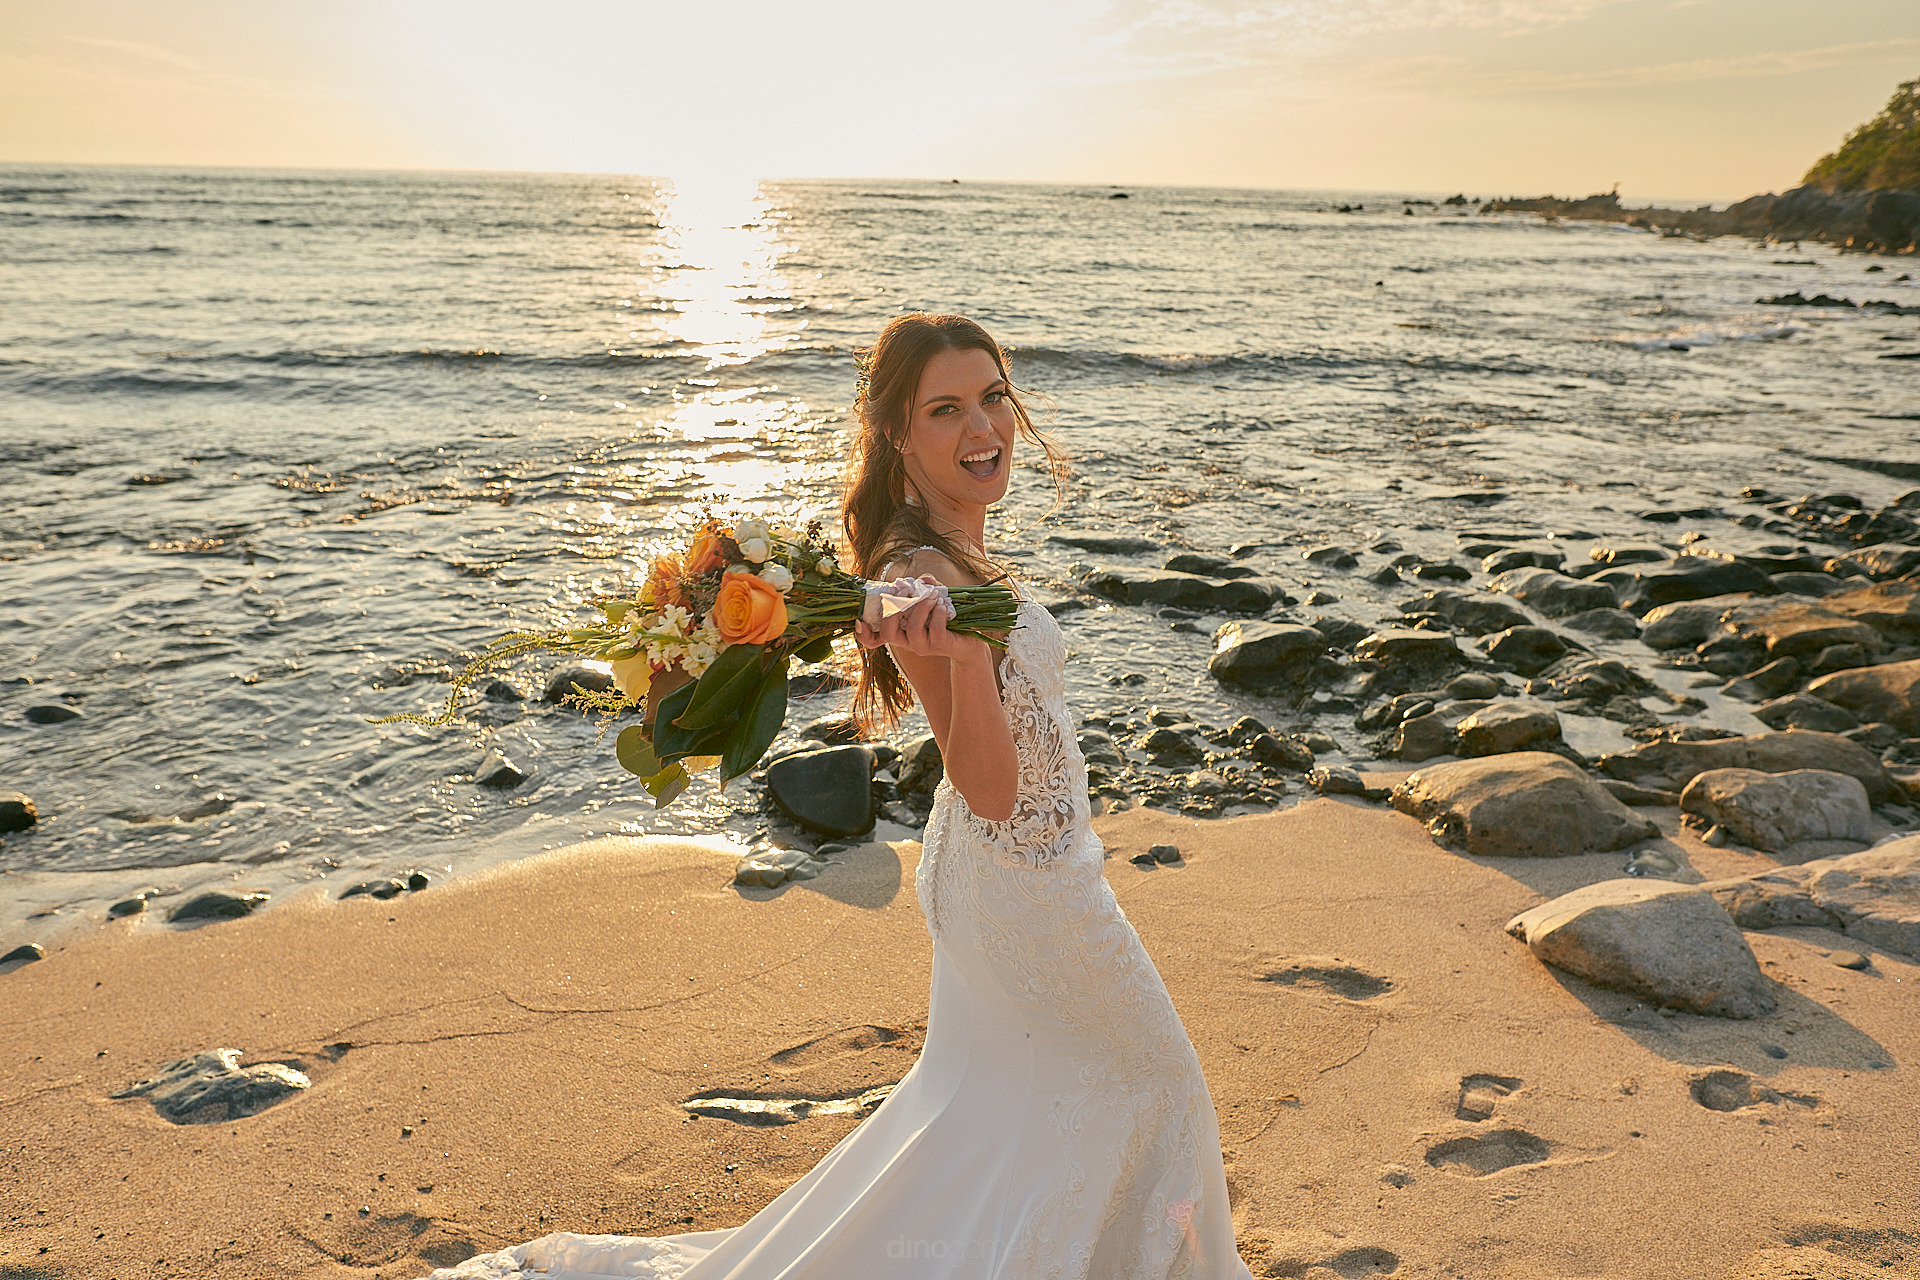 Unique Destination Wedding Experiences Through Stunning Photos